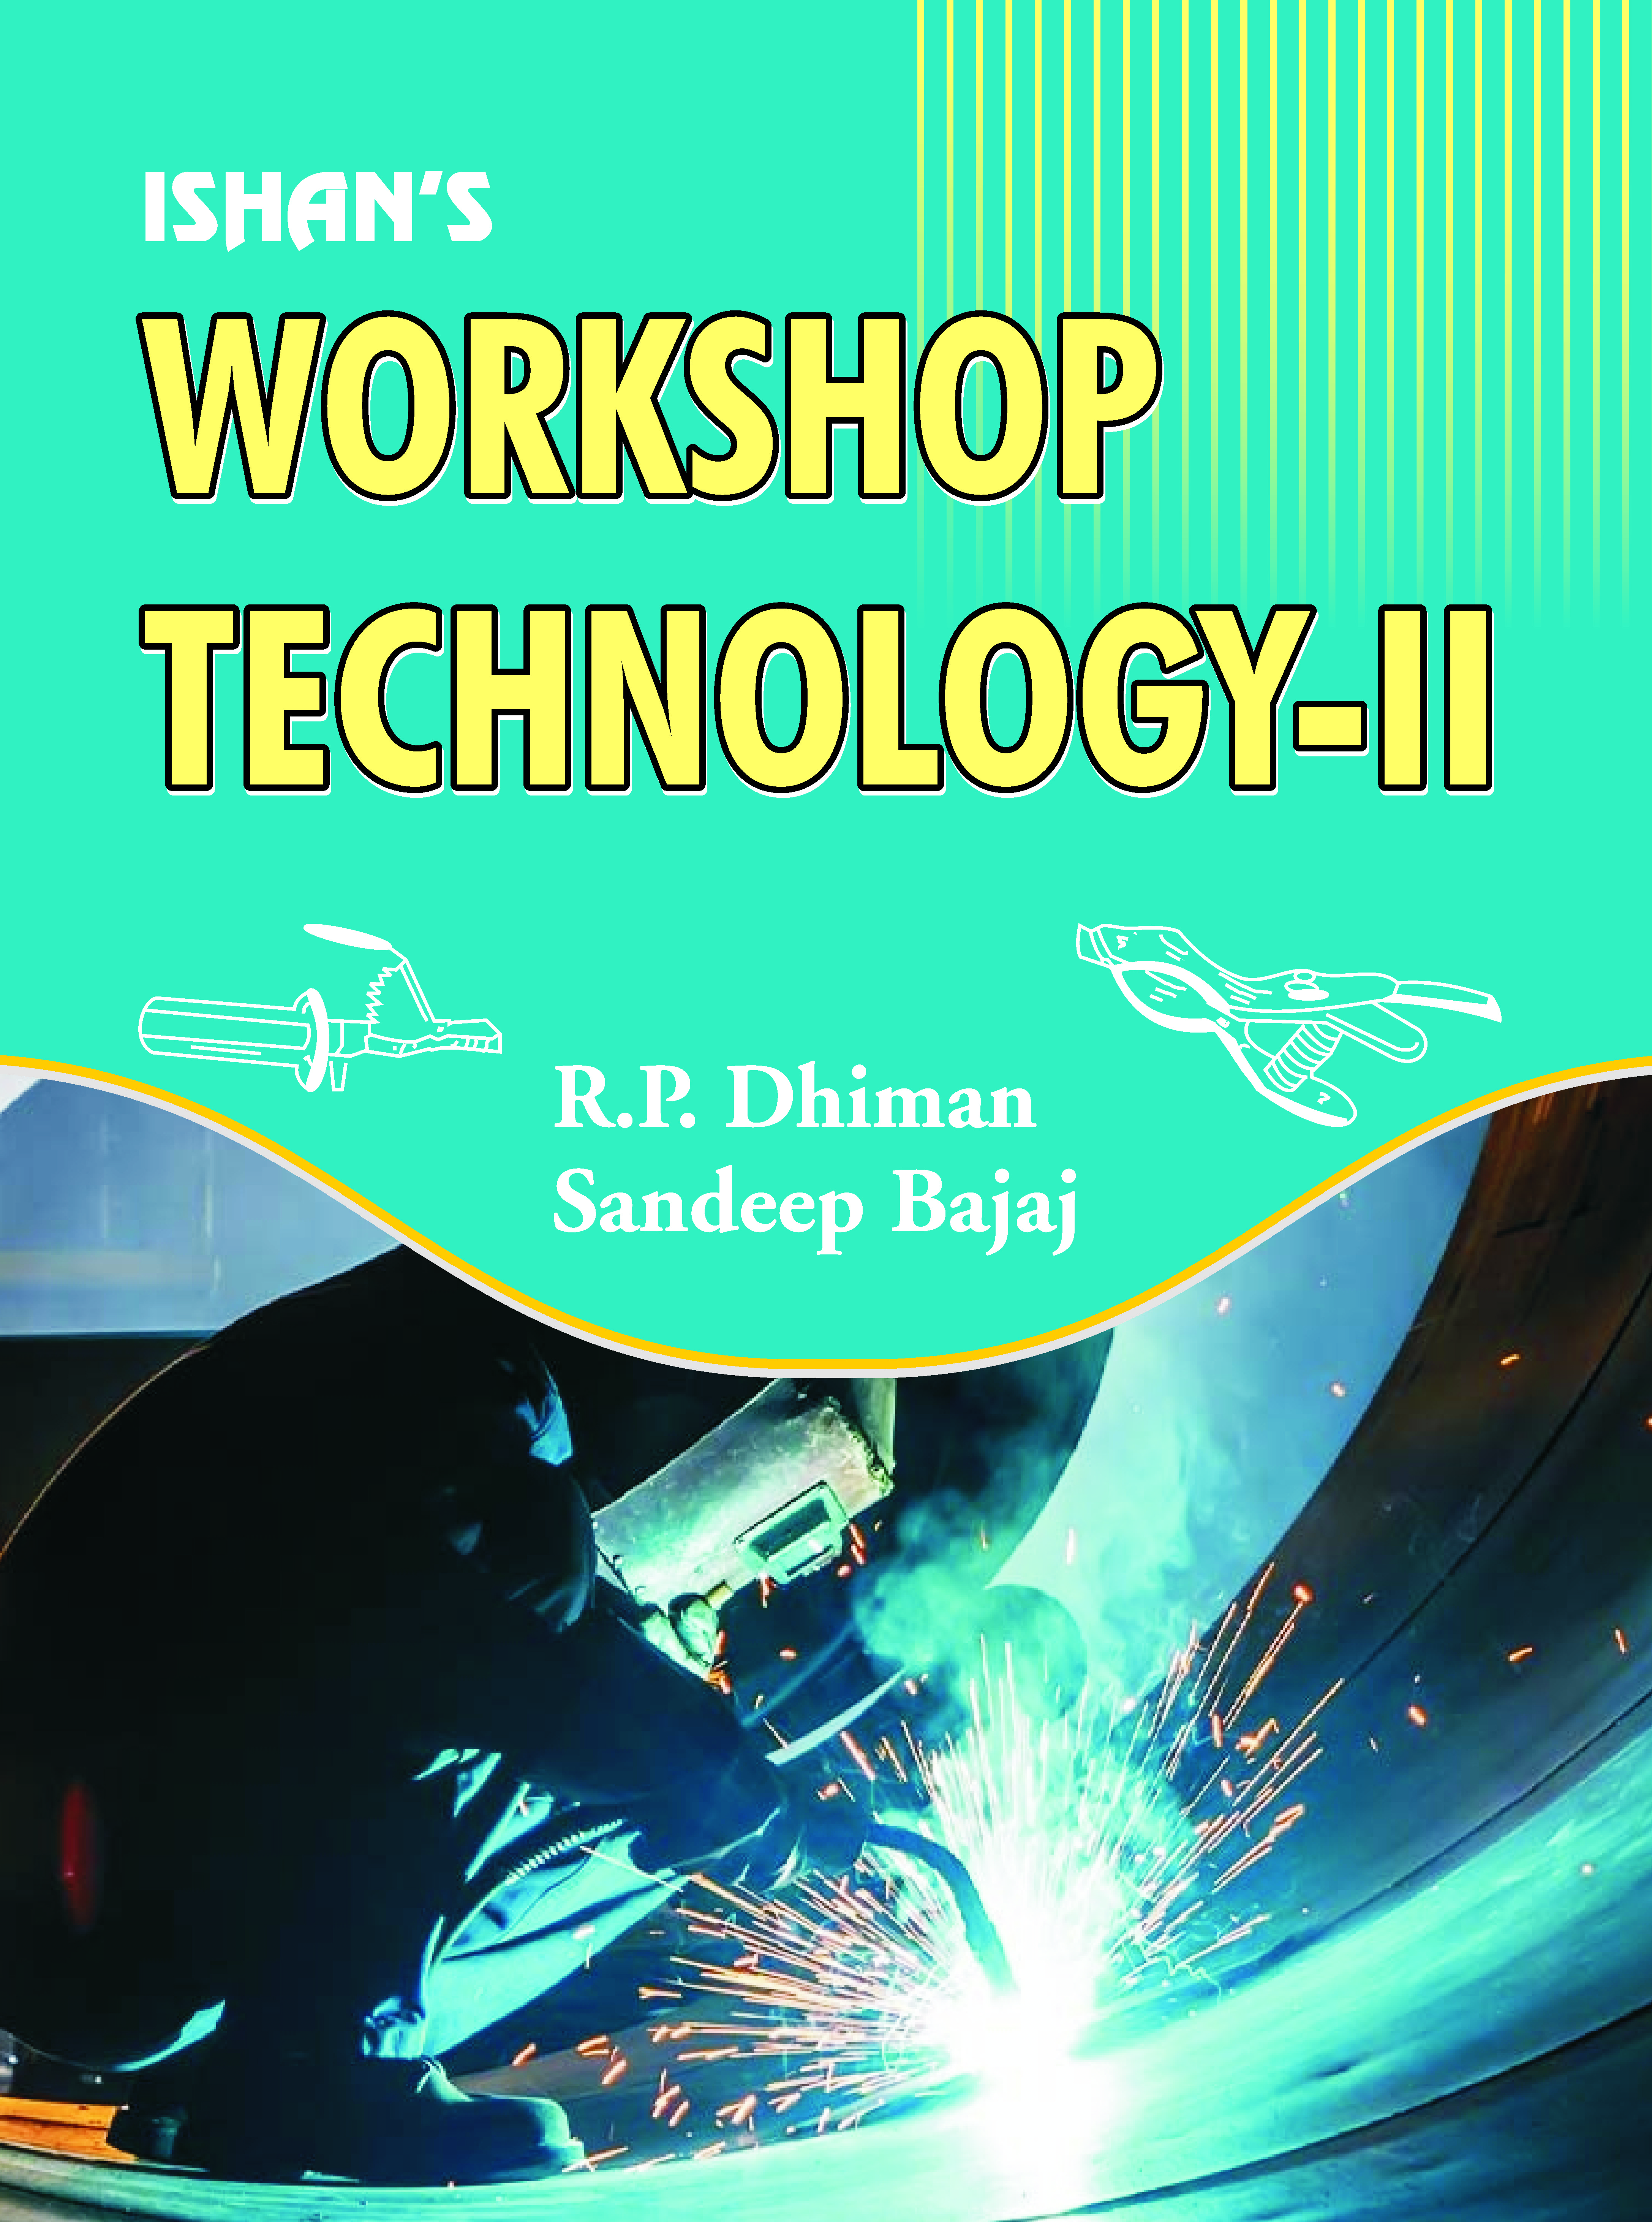 Workshop Technology - II